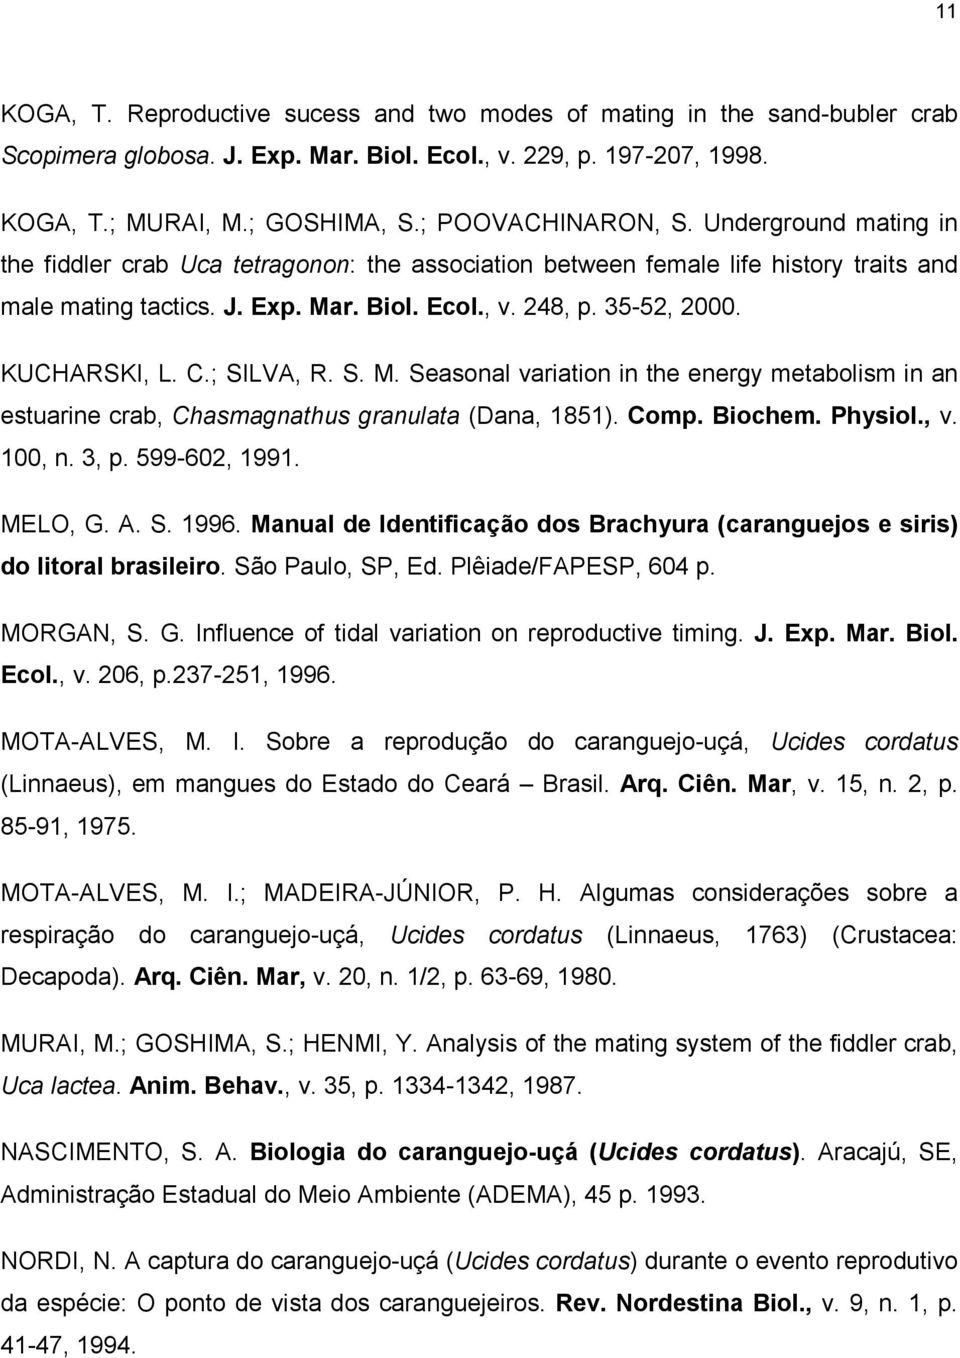 KUCHARSKI, L. C.; SILVA, R. S. M. Seasonal variation in the energy metabolism in an estuarine crab, Chasmagnathus granulata (Dana, 1851). Comp. Biochem. Physiol., v. 100, n. 3, p. 599-602, 1991.